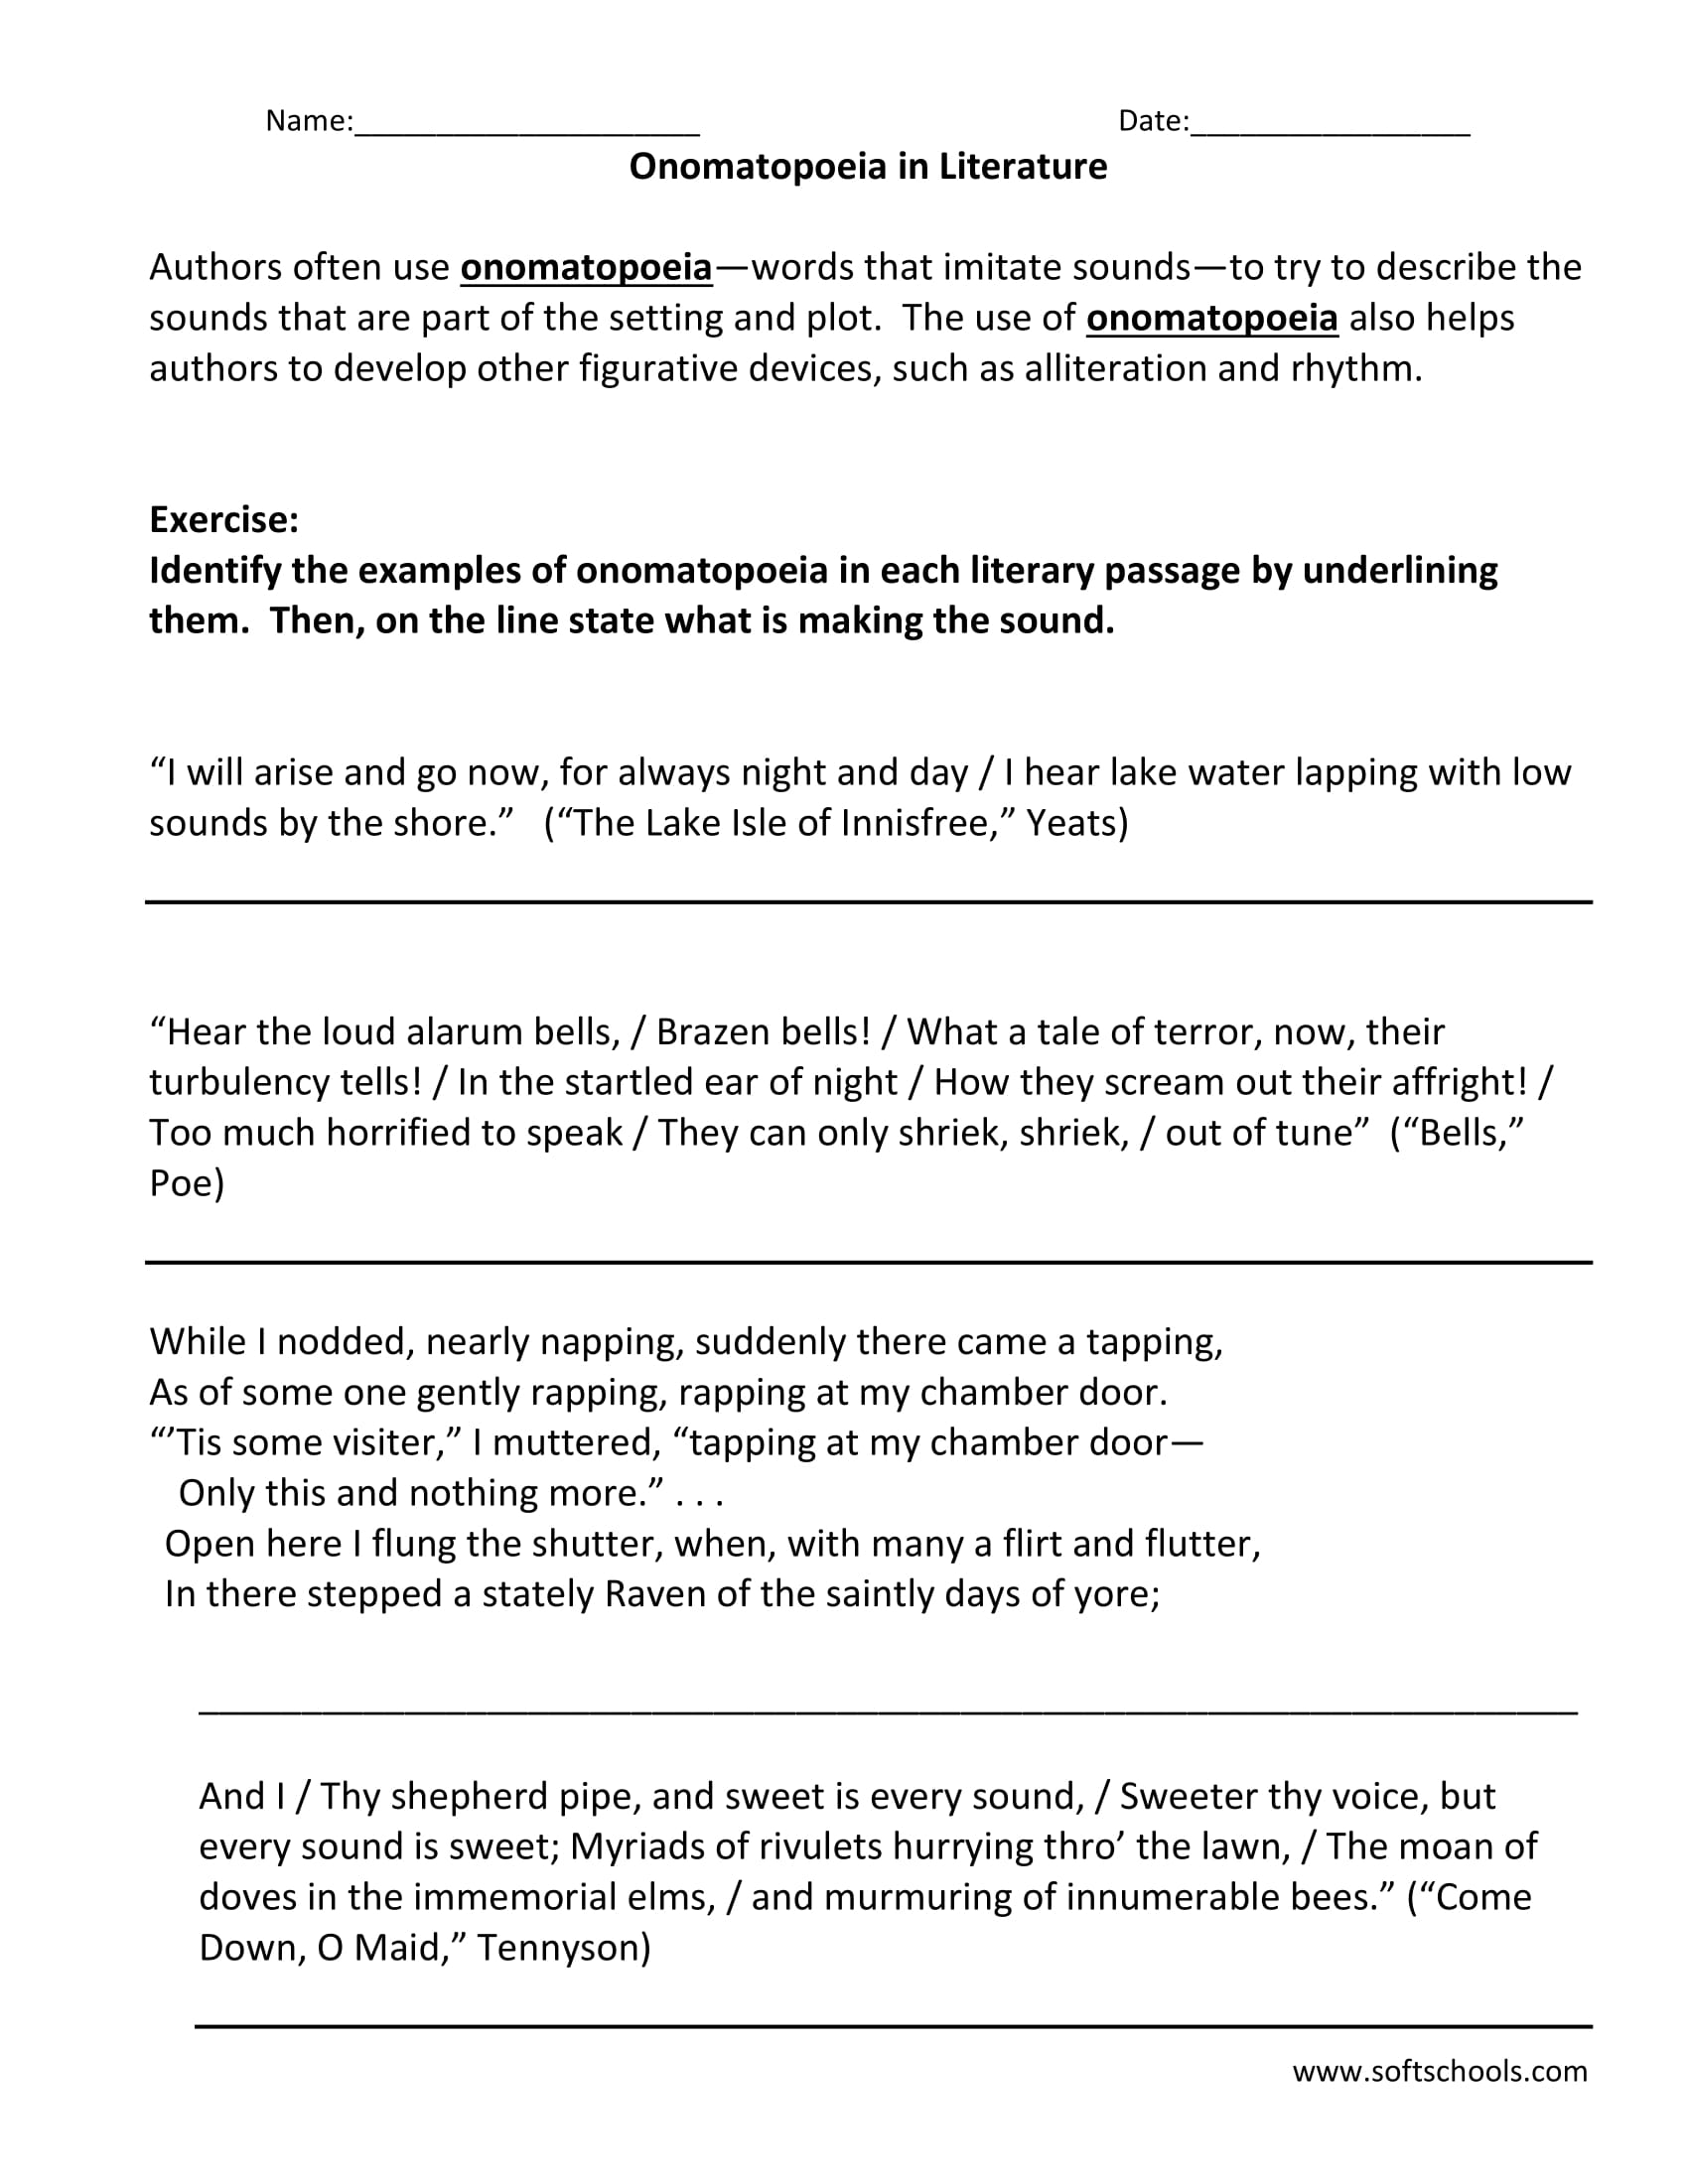 Onomatopoeia in Literature Worksheet Example